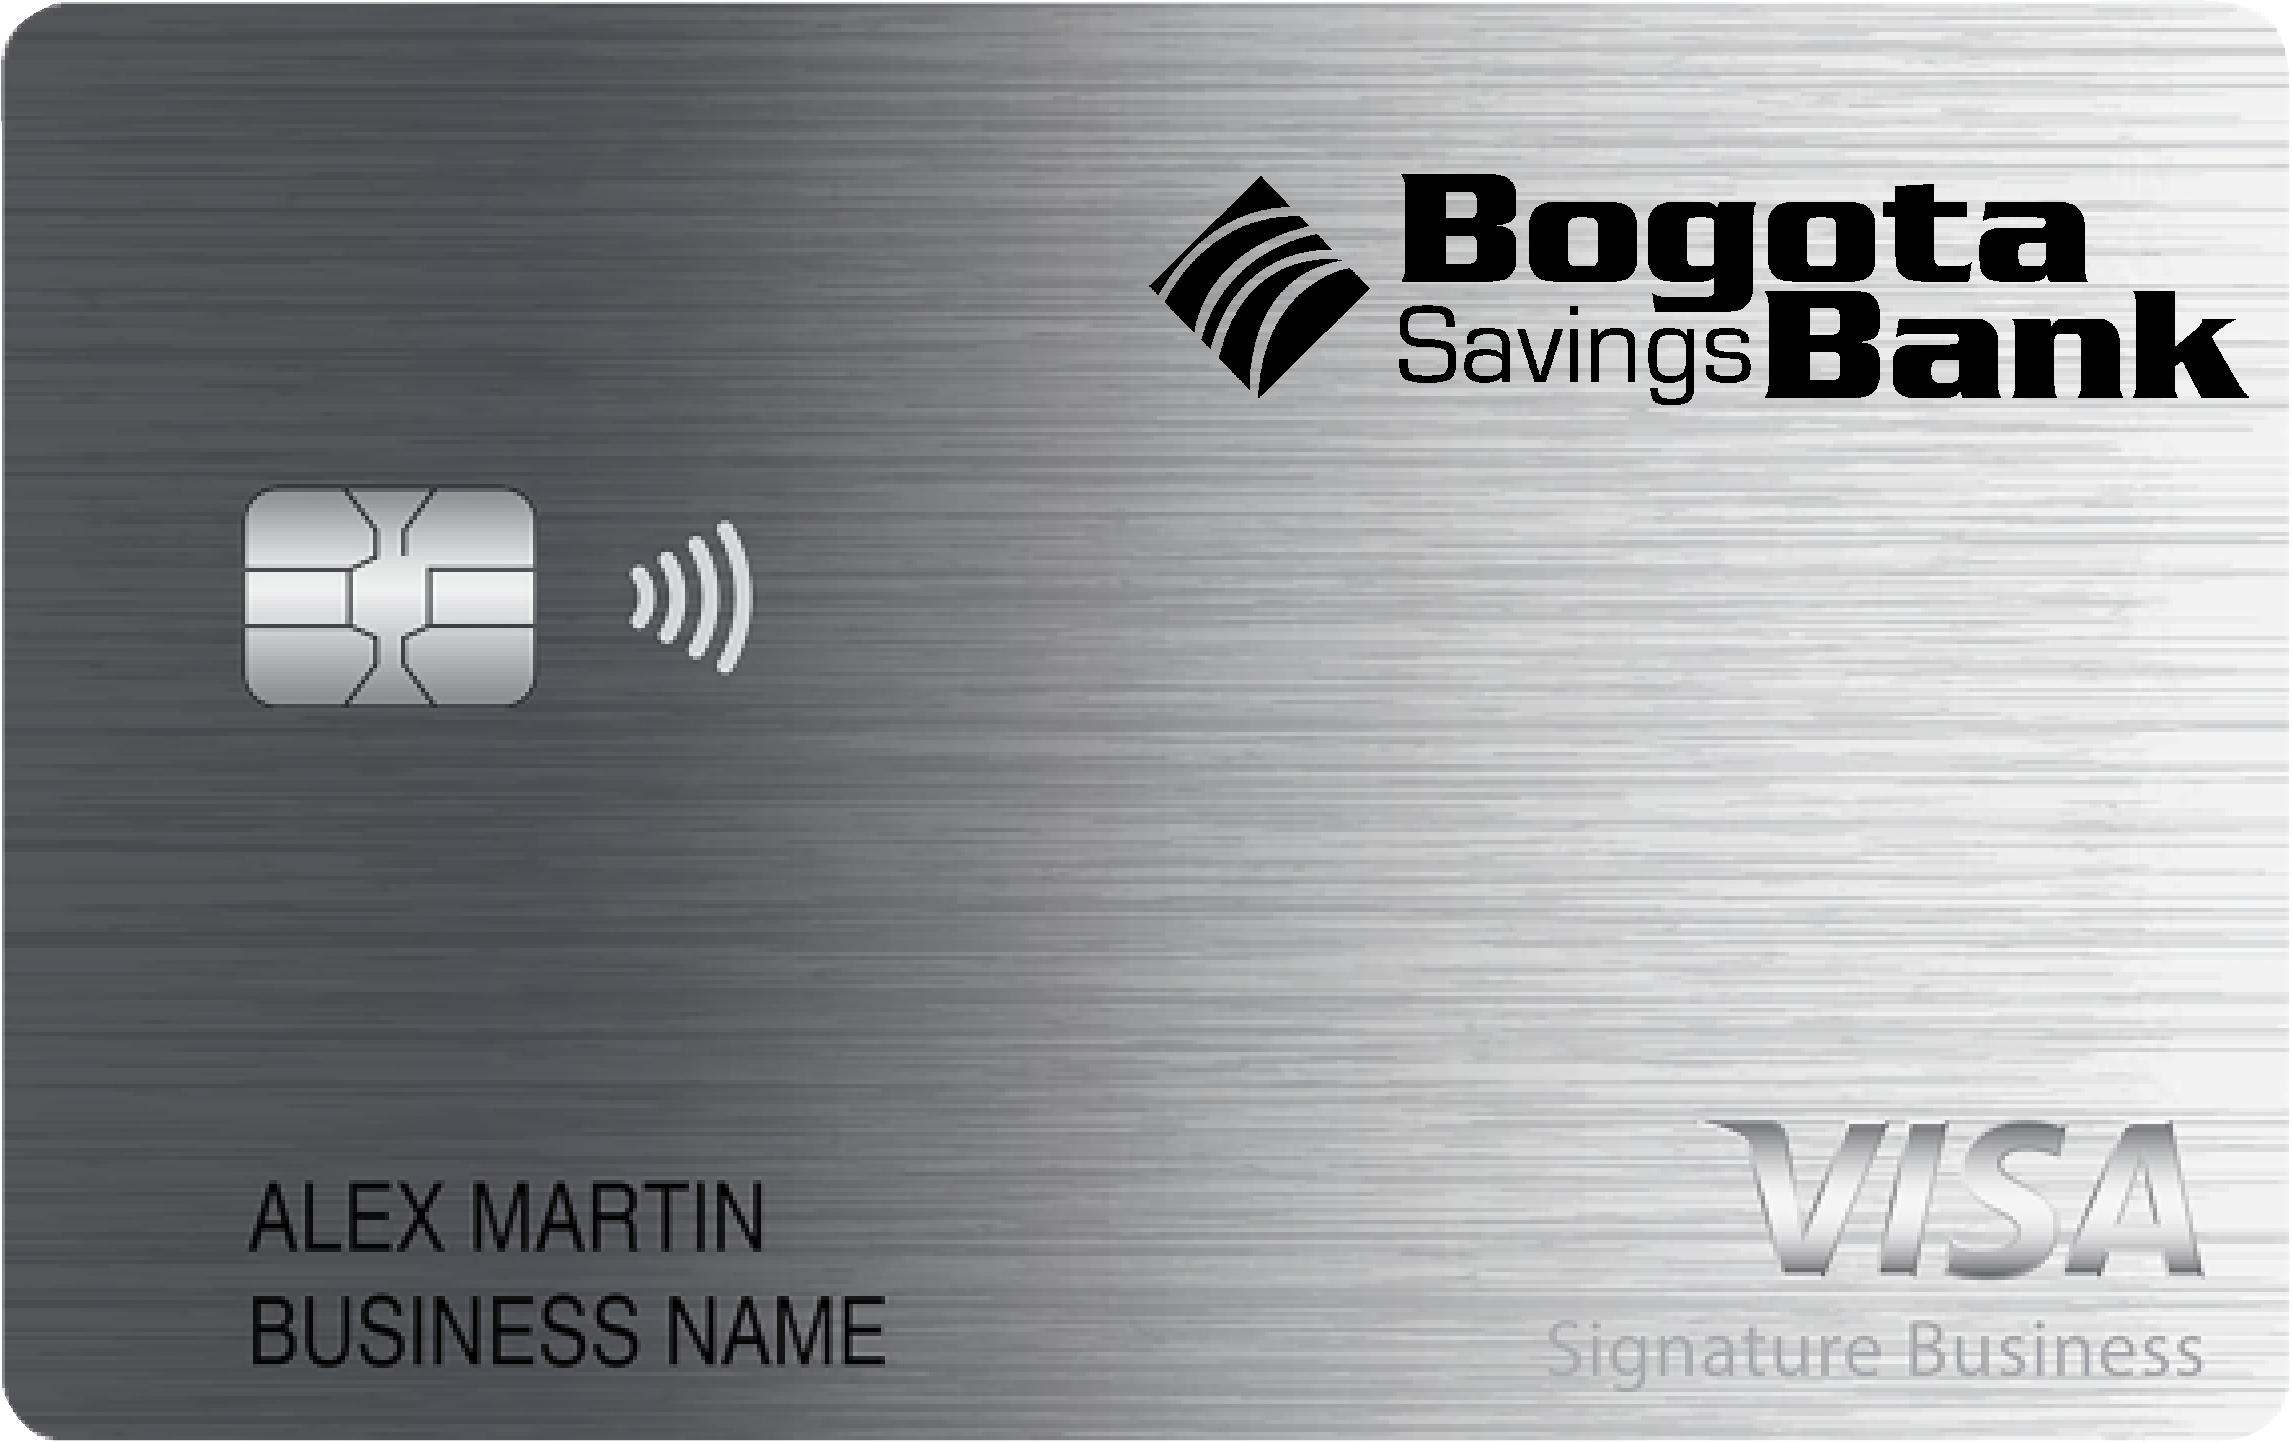 Bogota Savings Bank Smart Business Rewards Card